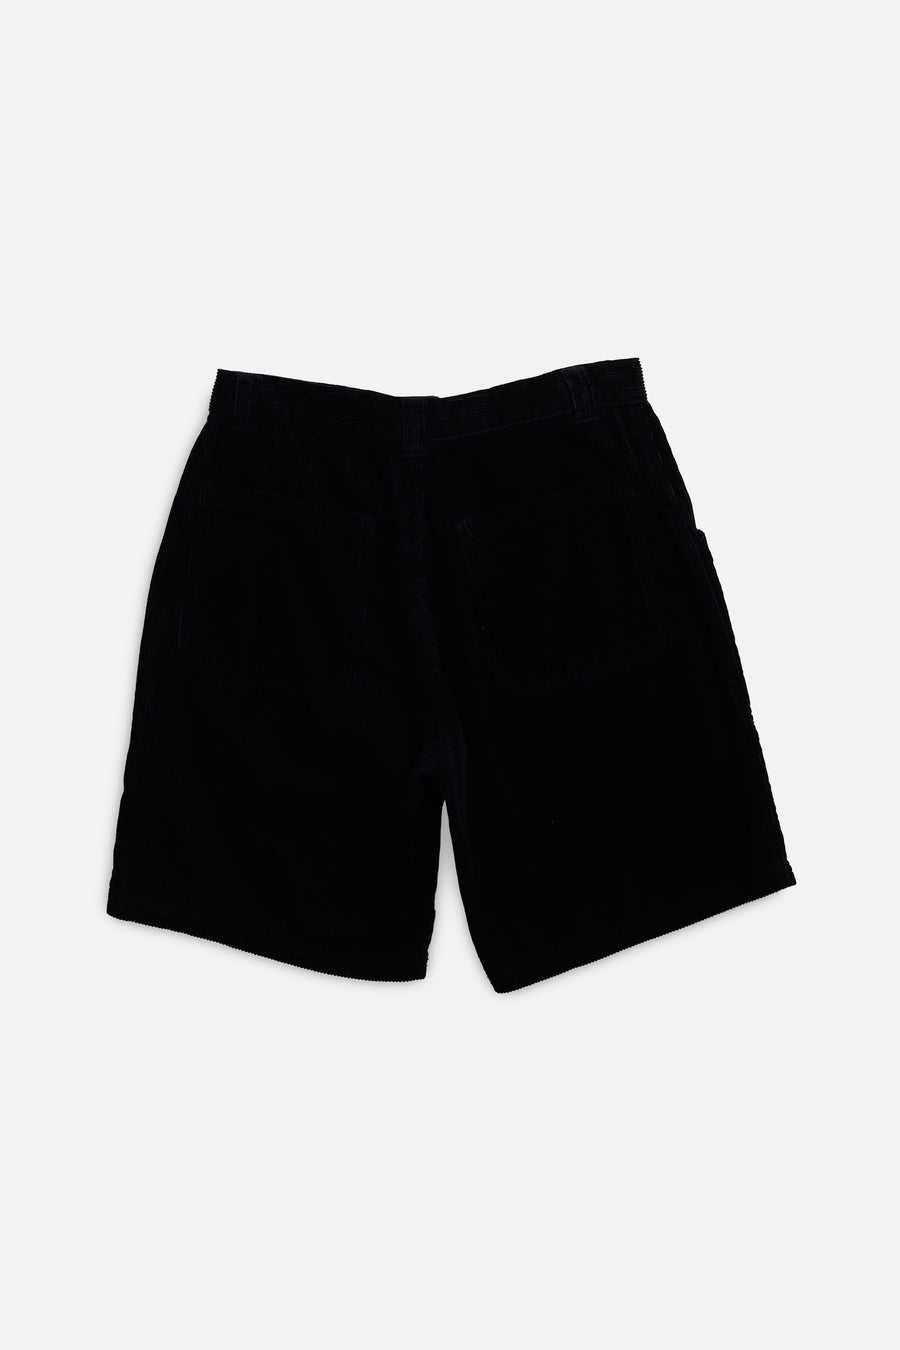 Vintage Op Corduroy Shorts - W30